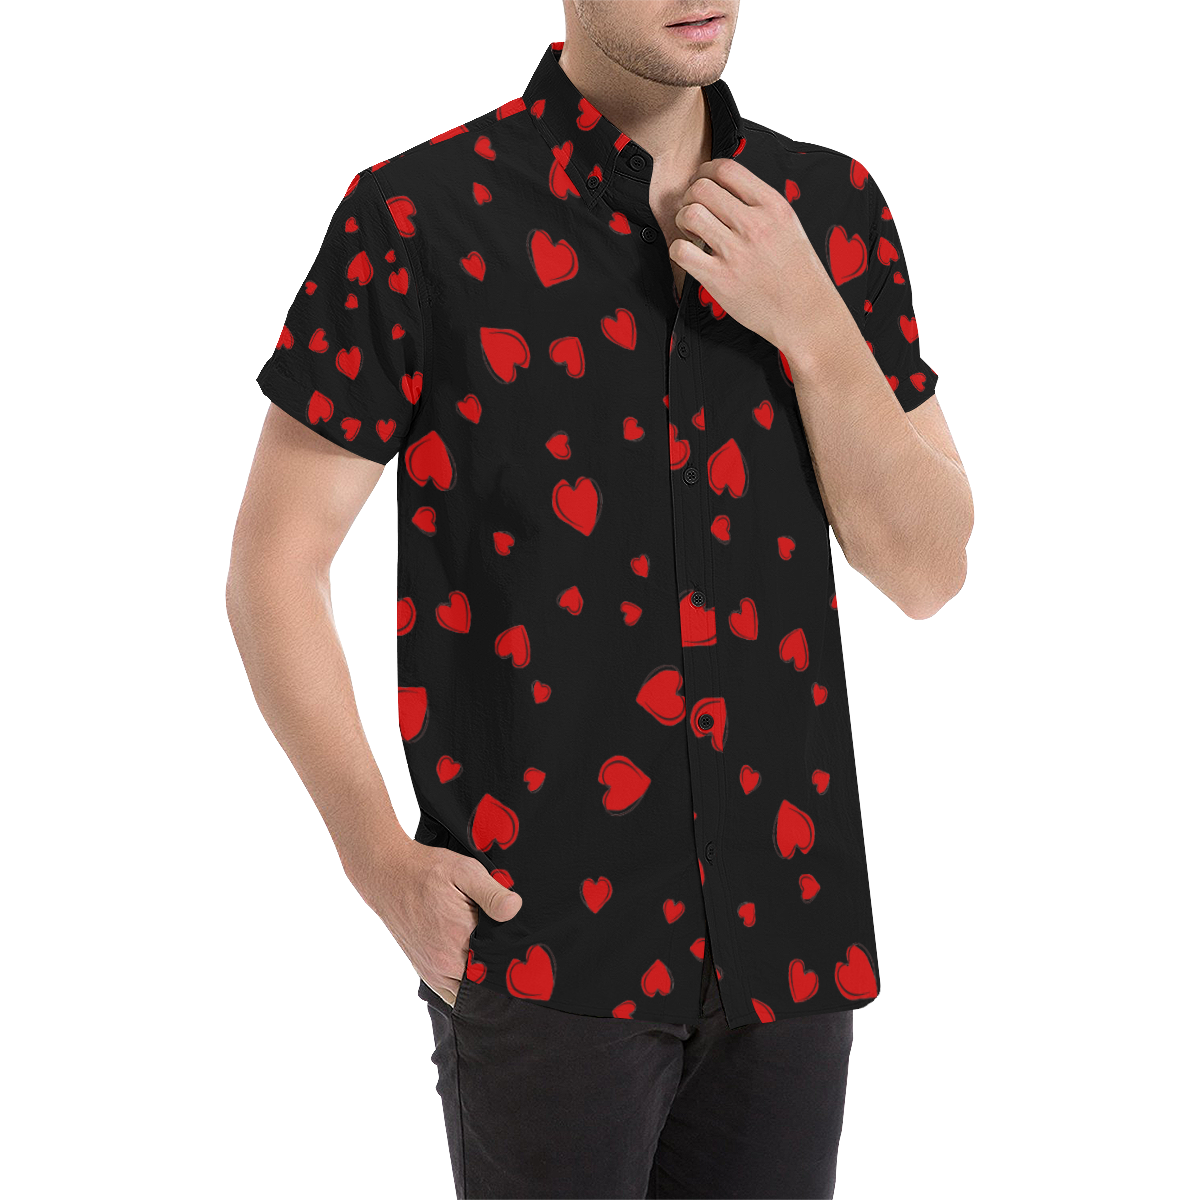 Red Hearts Floating on Black Men's All Over Print Short Sleeve Shirt (Model T53)